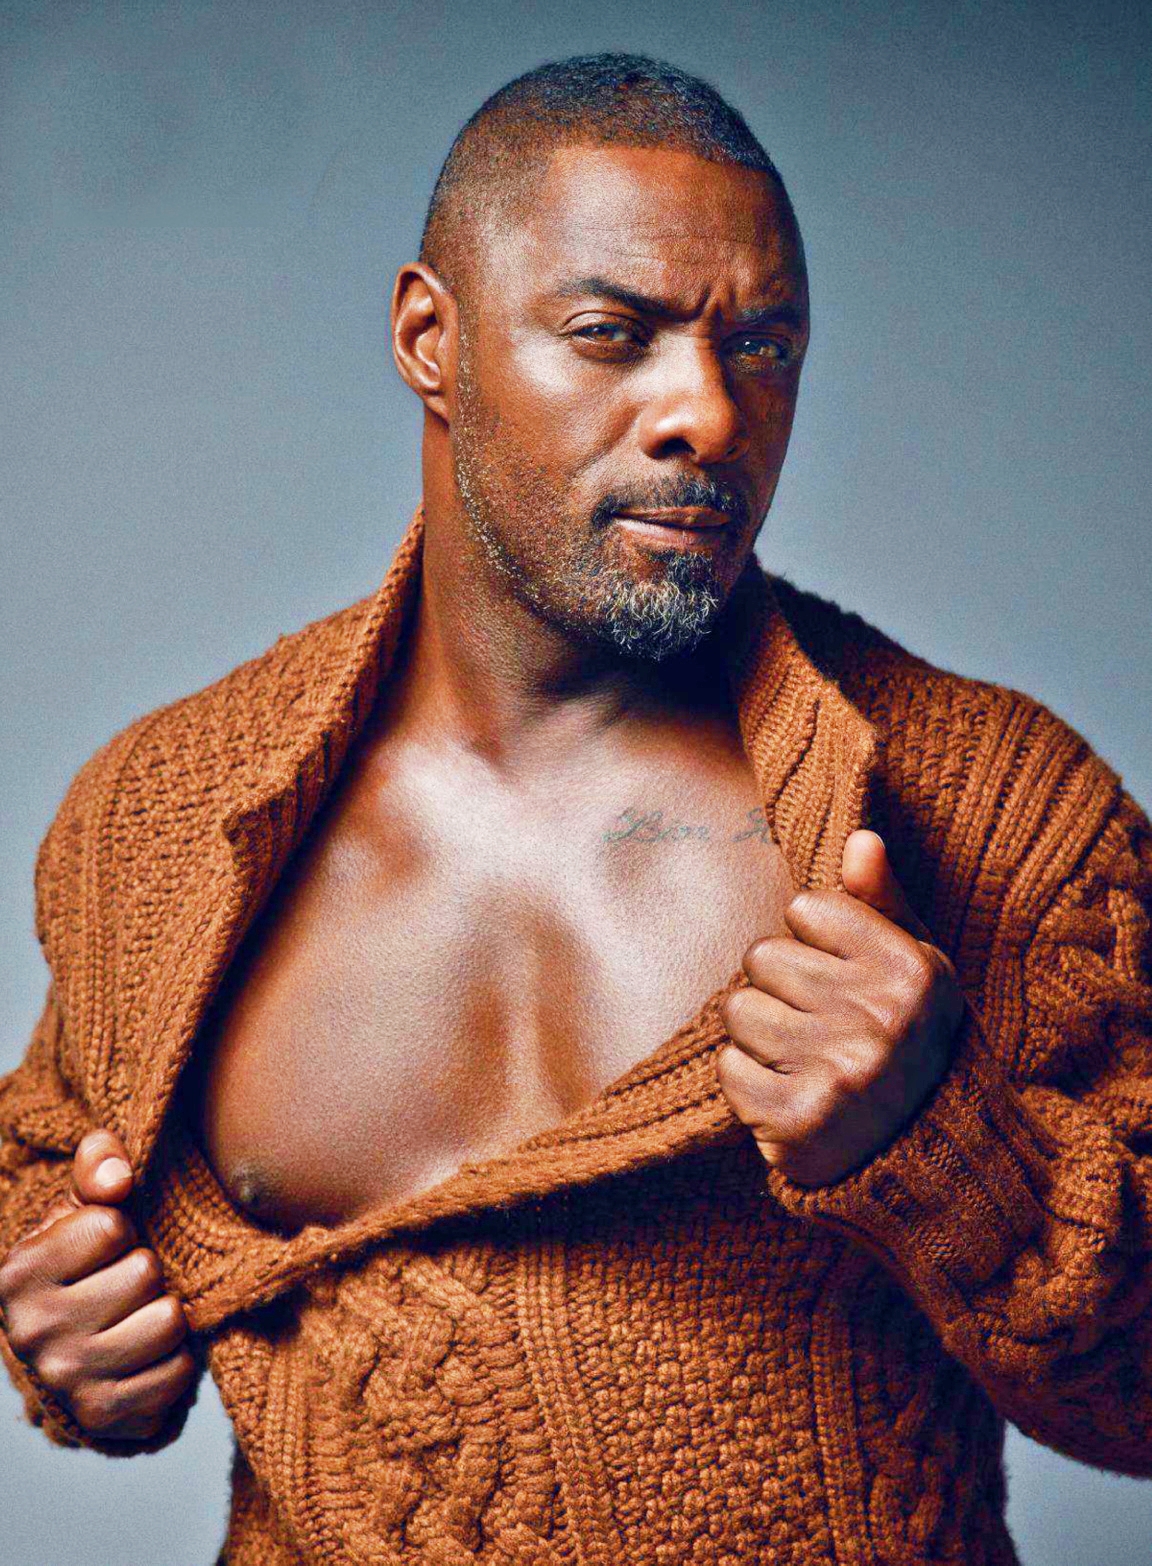 Idris Elba Is The Perfect Human Male